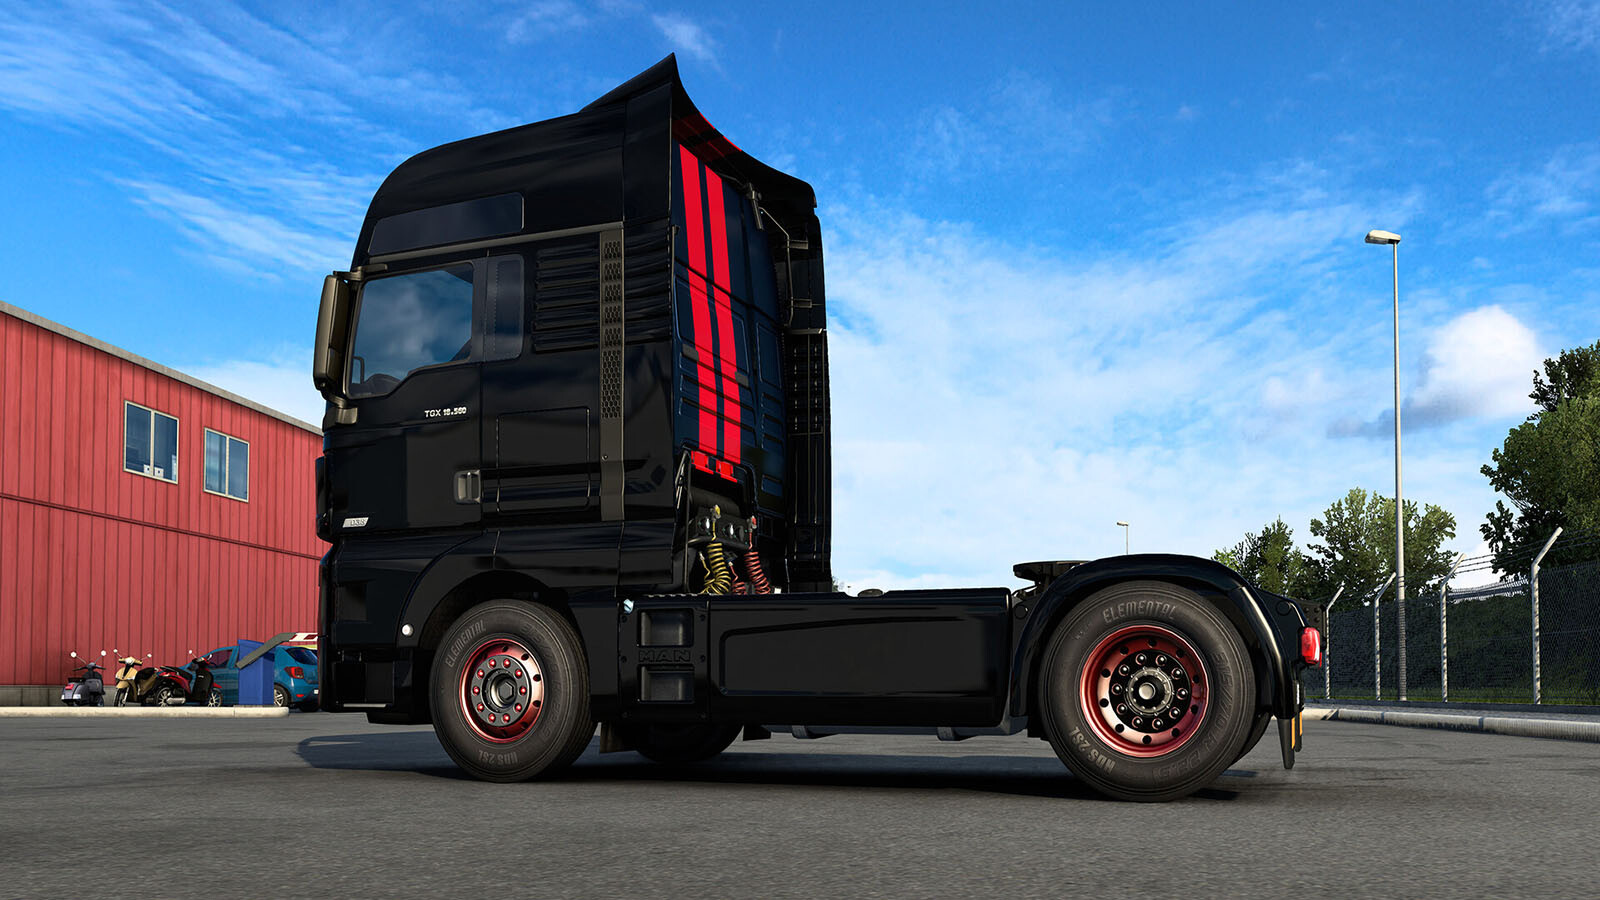 Euro Truck Simulator 2 Adds New Man TGX; American Truck Simulator